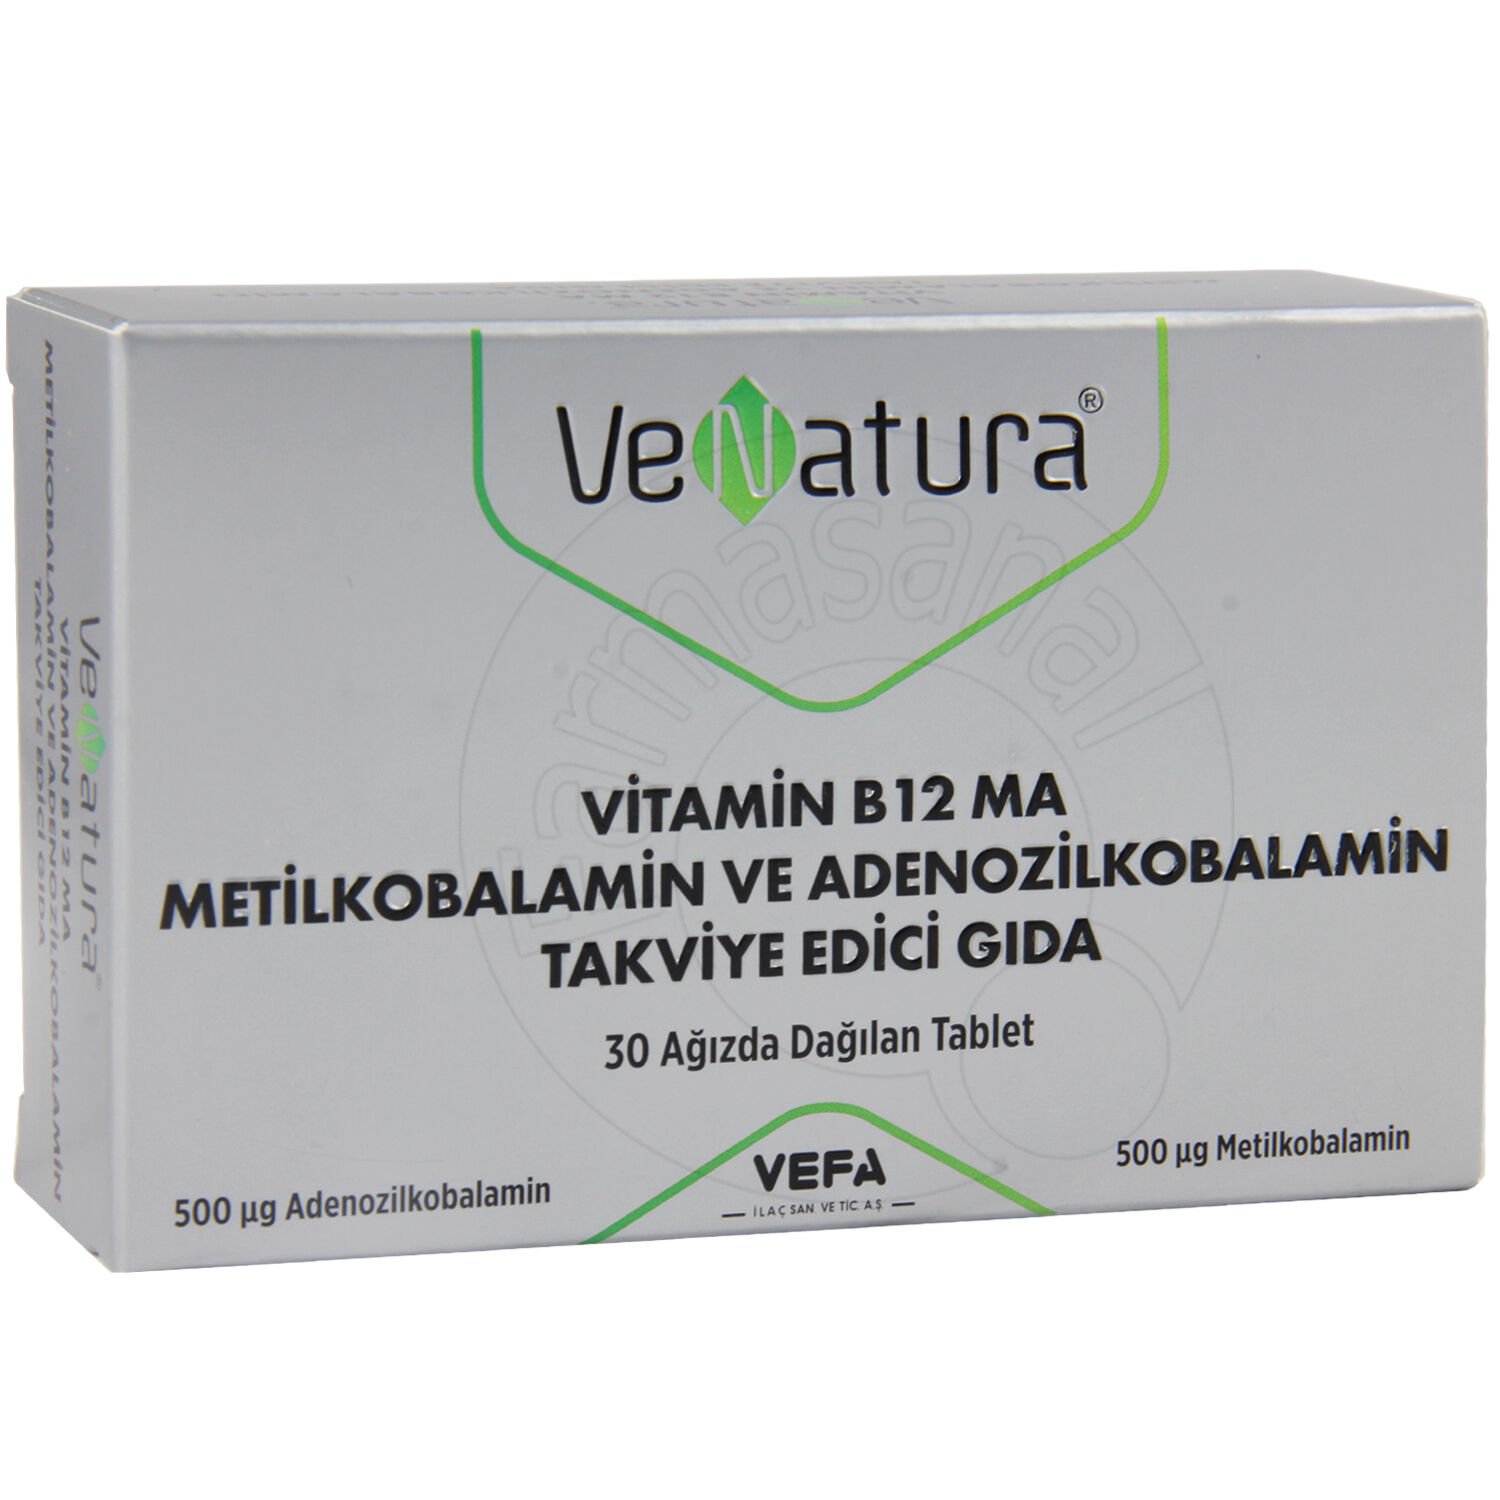 Venatura Vitamin B12 Ma Metilkobalamin Ve Adenozilkobalamin 30 Tablet